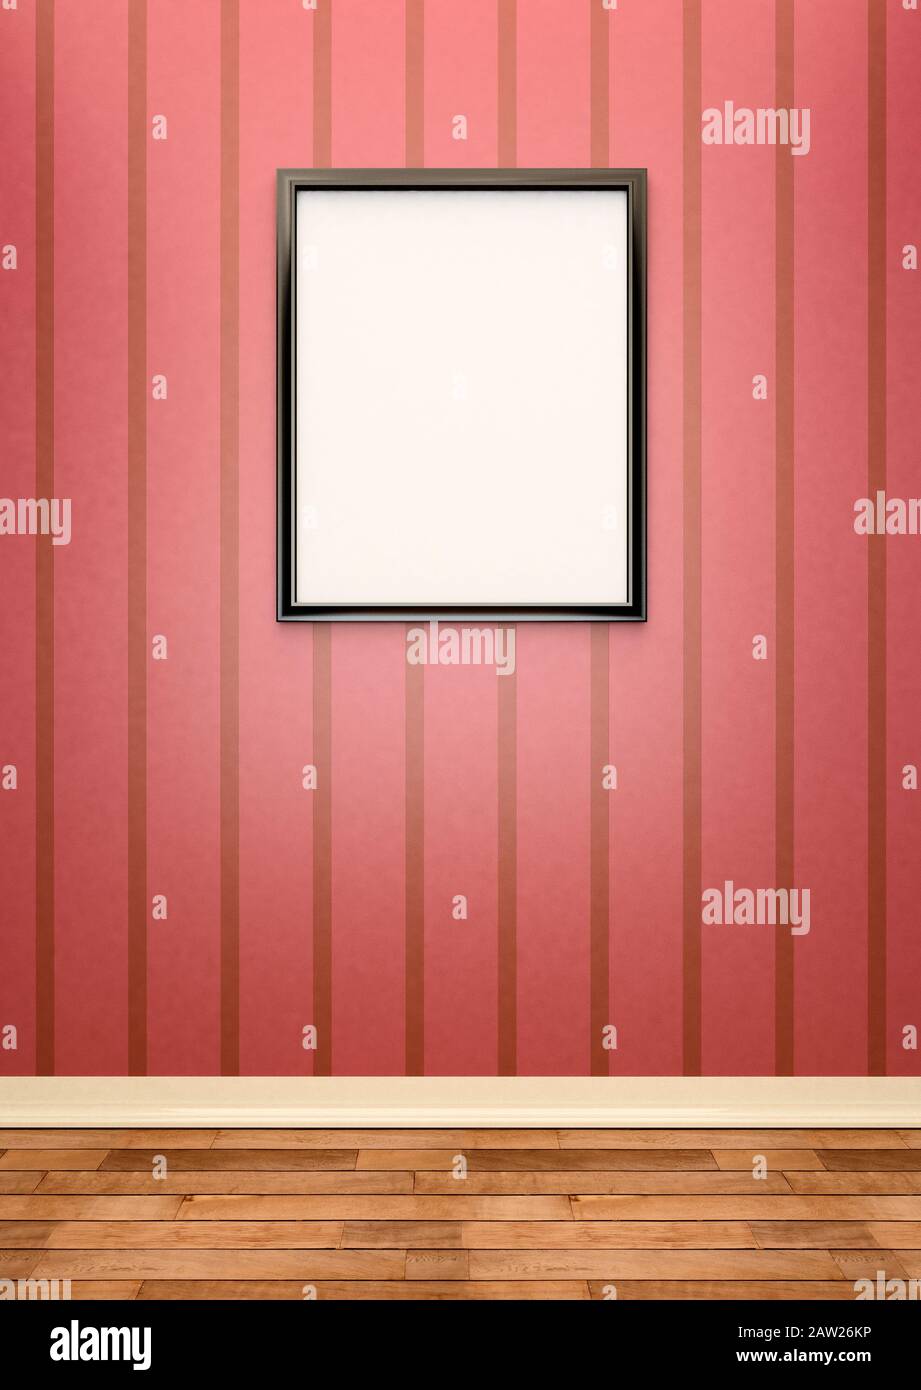 Grande cornice nera bianca su una parete a righe rosse Foto Stock